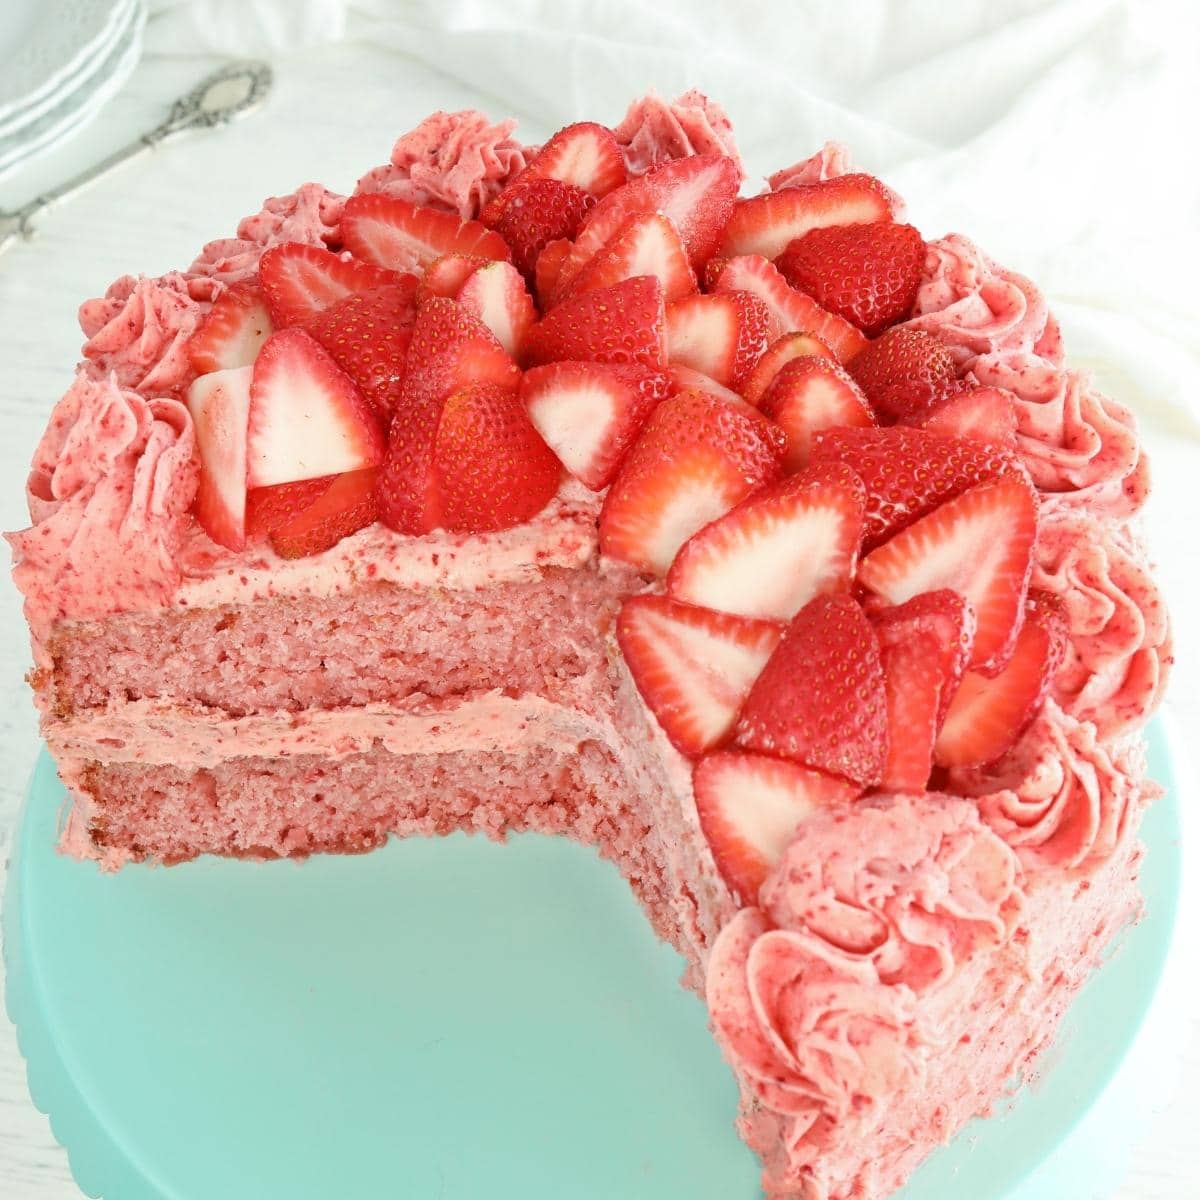 Almond Flour Cake With Strawberry and Raw Jam - LemonsforLulu.com